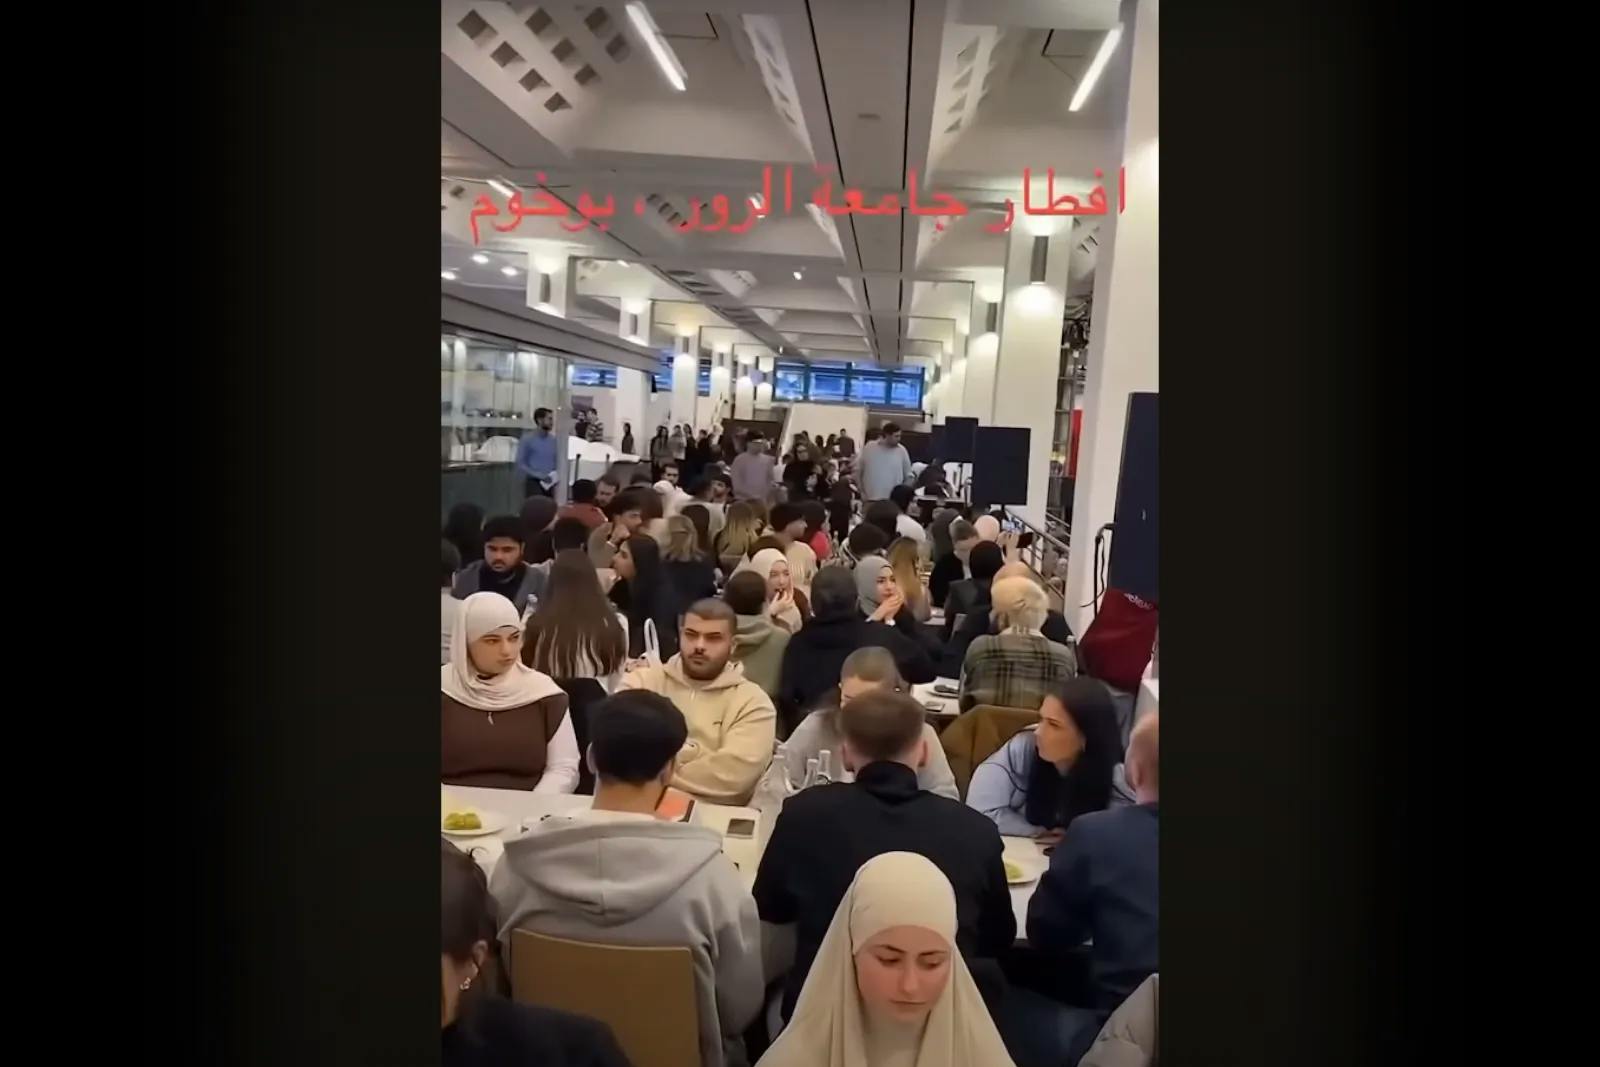 Ramadan: Szenen aus Bochum zeigen muslimische Machtdemonstration